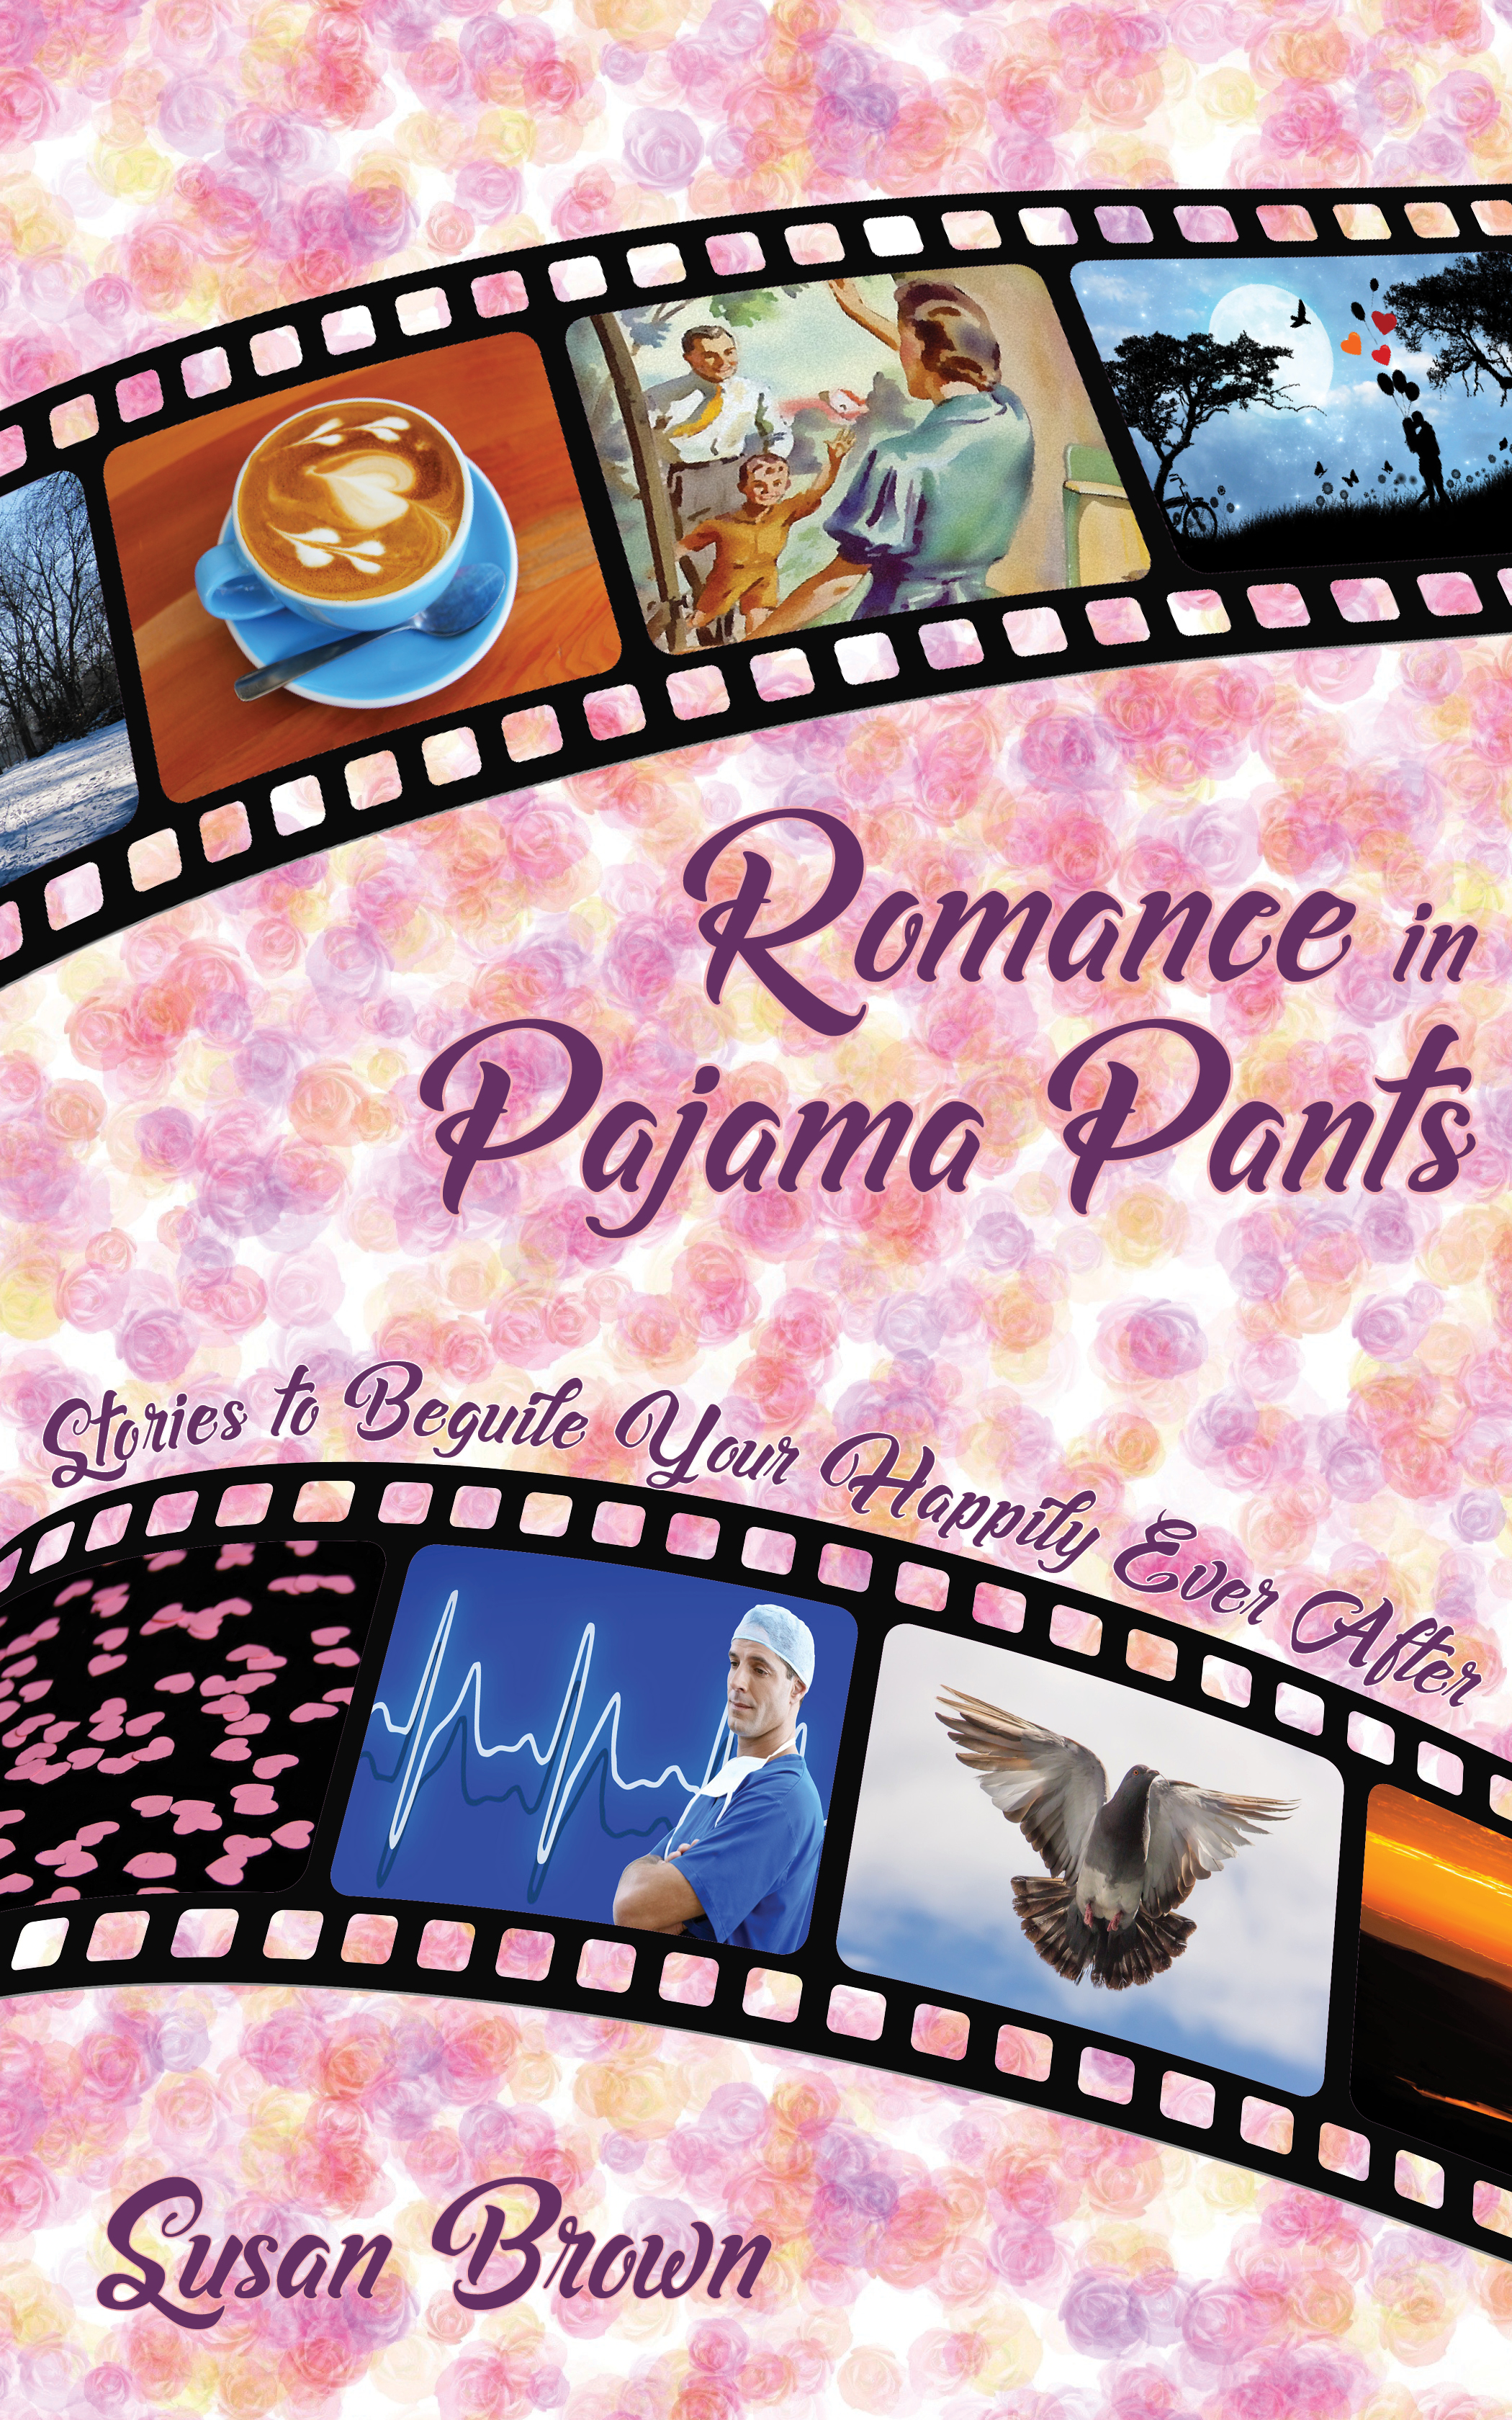 Romance in Pajama Pants by Susan Brown